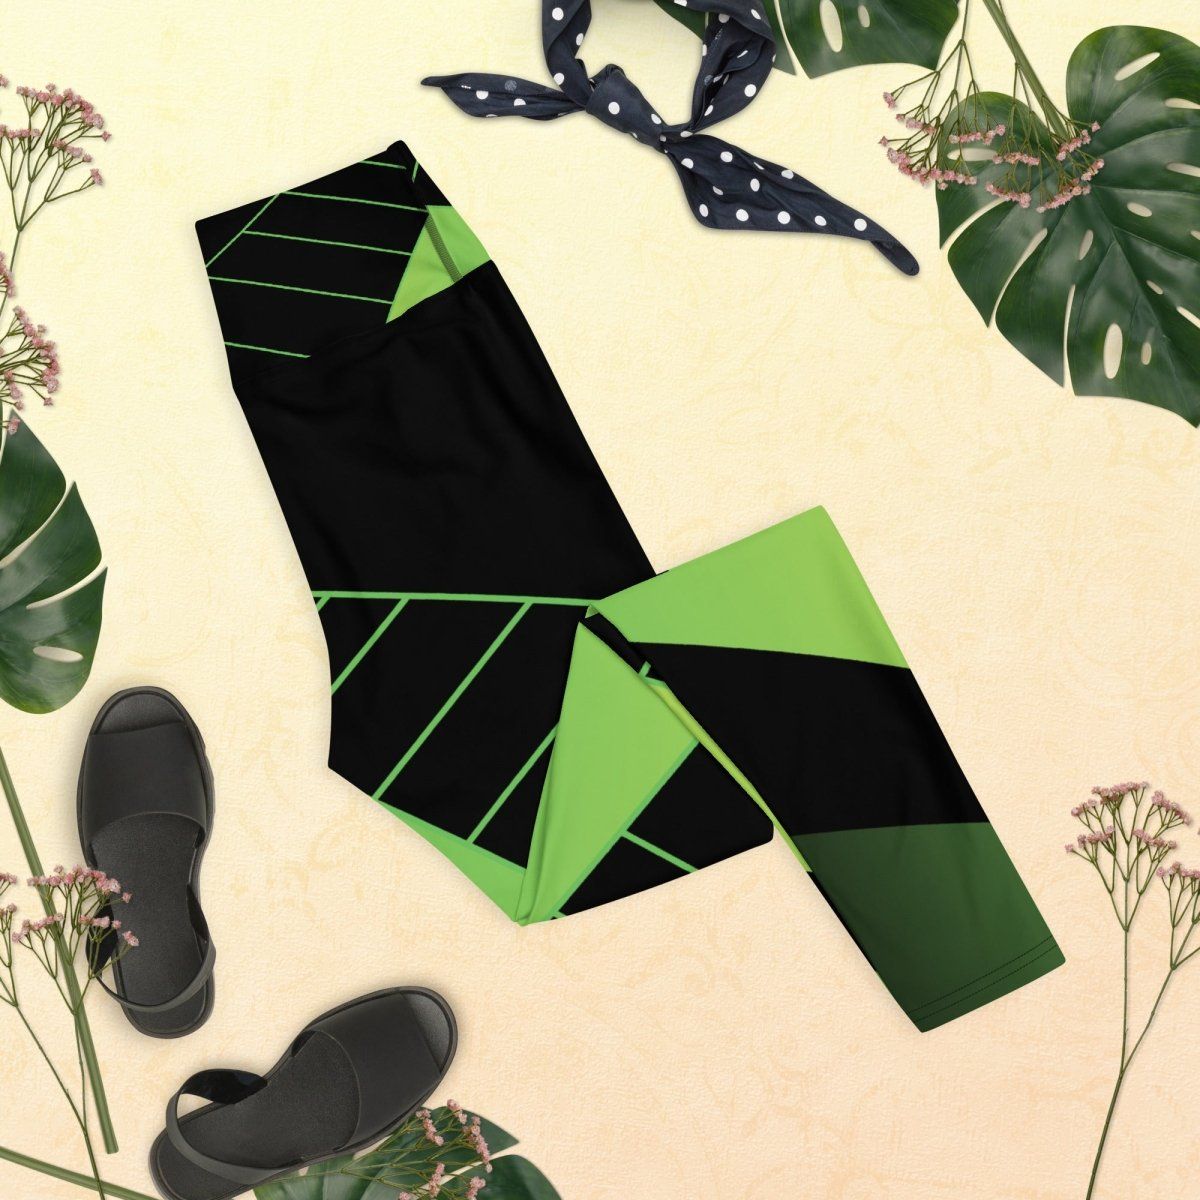 Alive Green Black Yoga Leggings - Stylish Workout Pants for Women - Iron Phoenix GHG